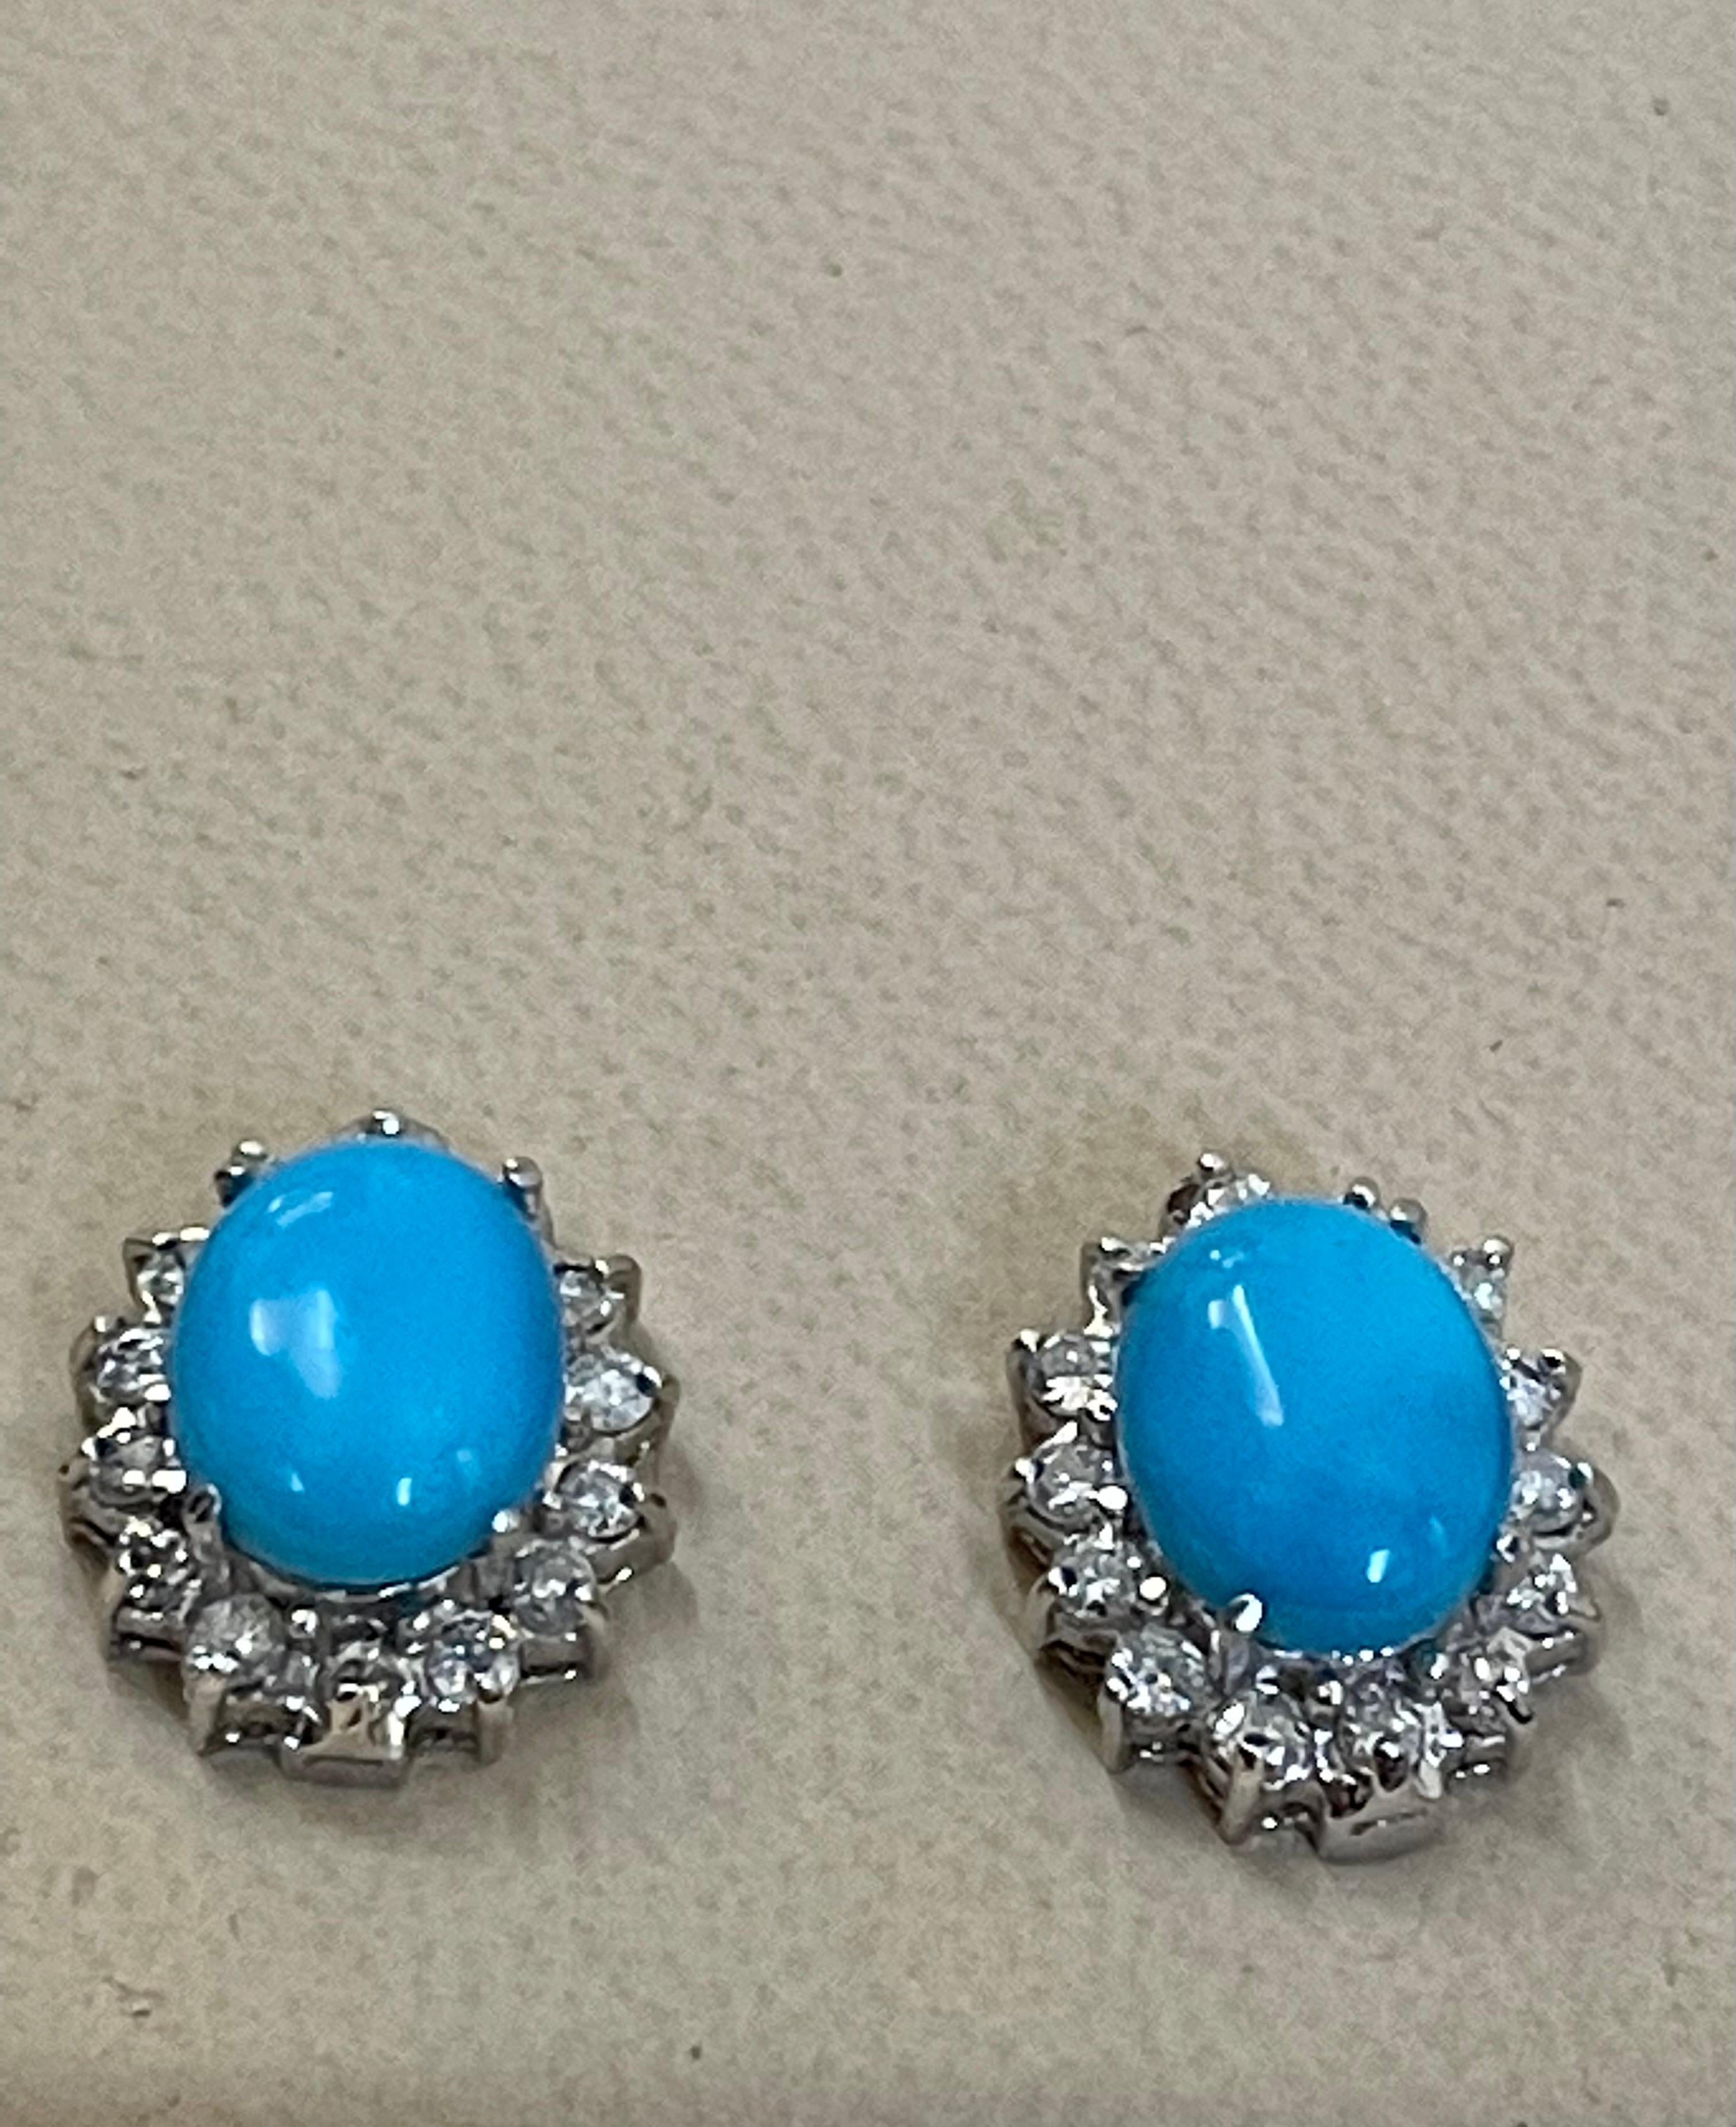 8 Ct Oval Sleeping Beauty Turquoise & 1 Ct Diamond Stud Earrings 14 K White Gold 6